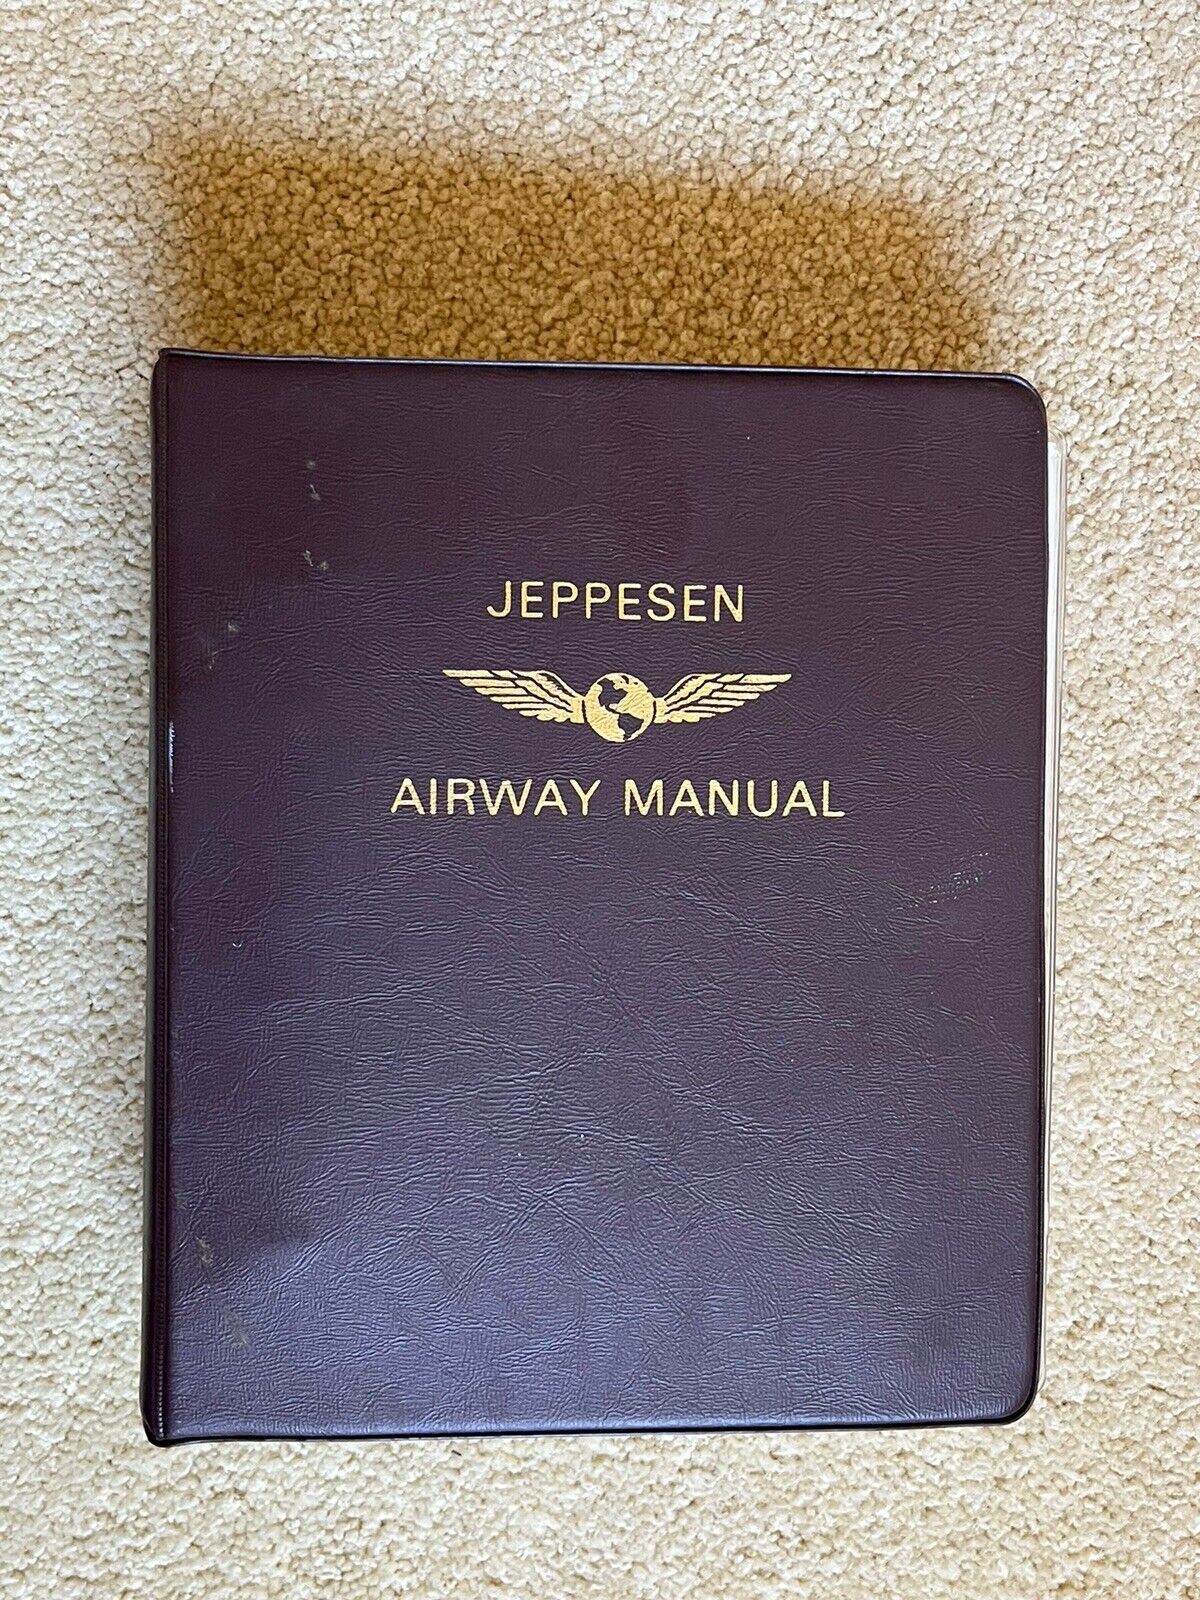 Jeppesen Airway Manual 1980s-90s Midwest MINN, MO, MONT, NEB, S DAK, N DAK, WYO+